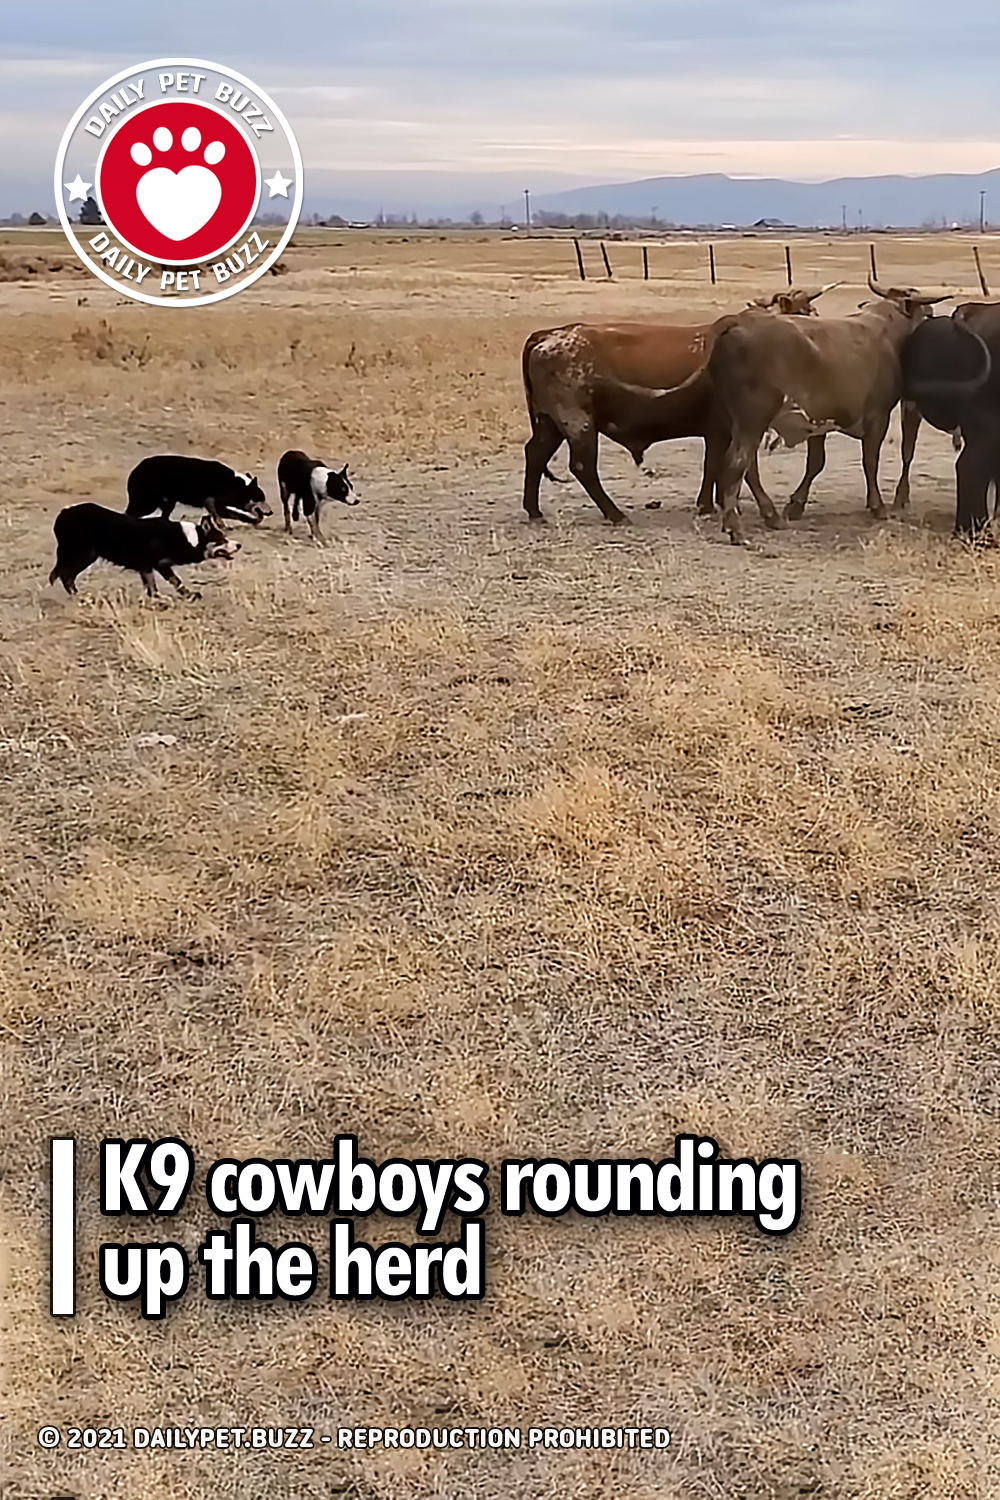 K9 cowboys rounding up the herd